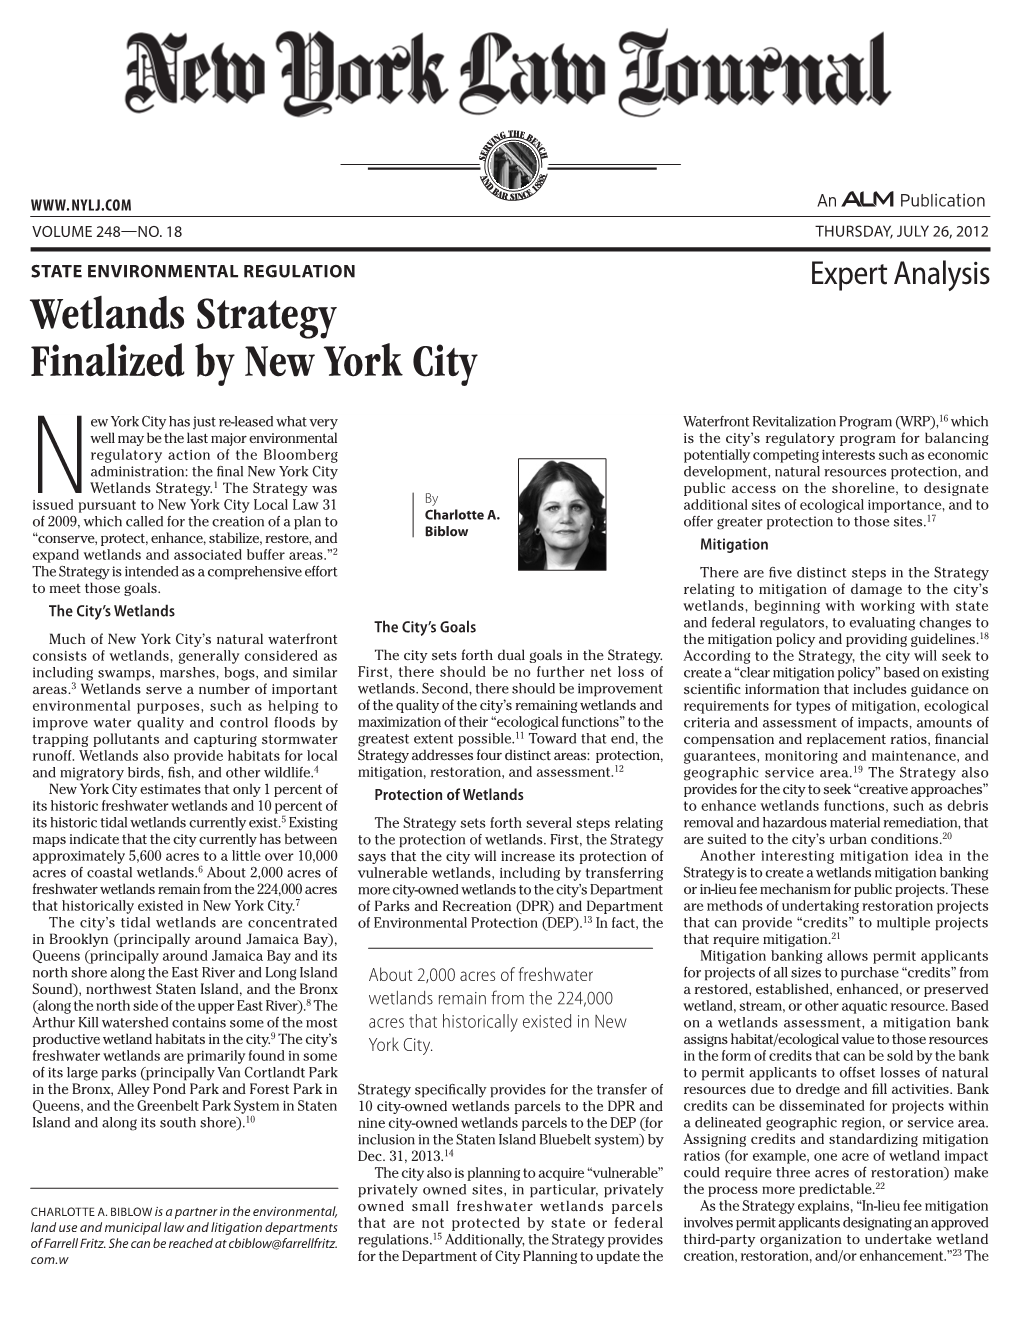 Wetlands Strategy Finalized by New York City